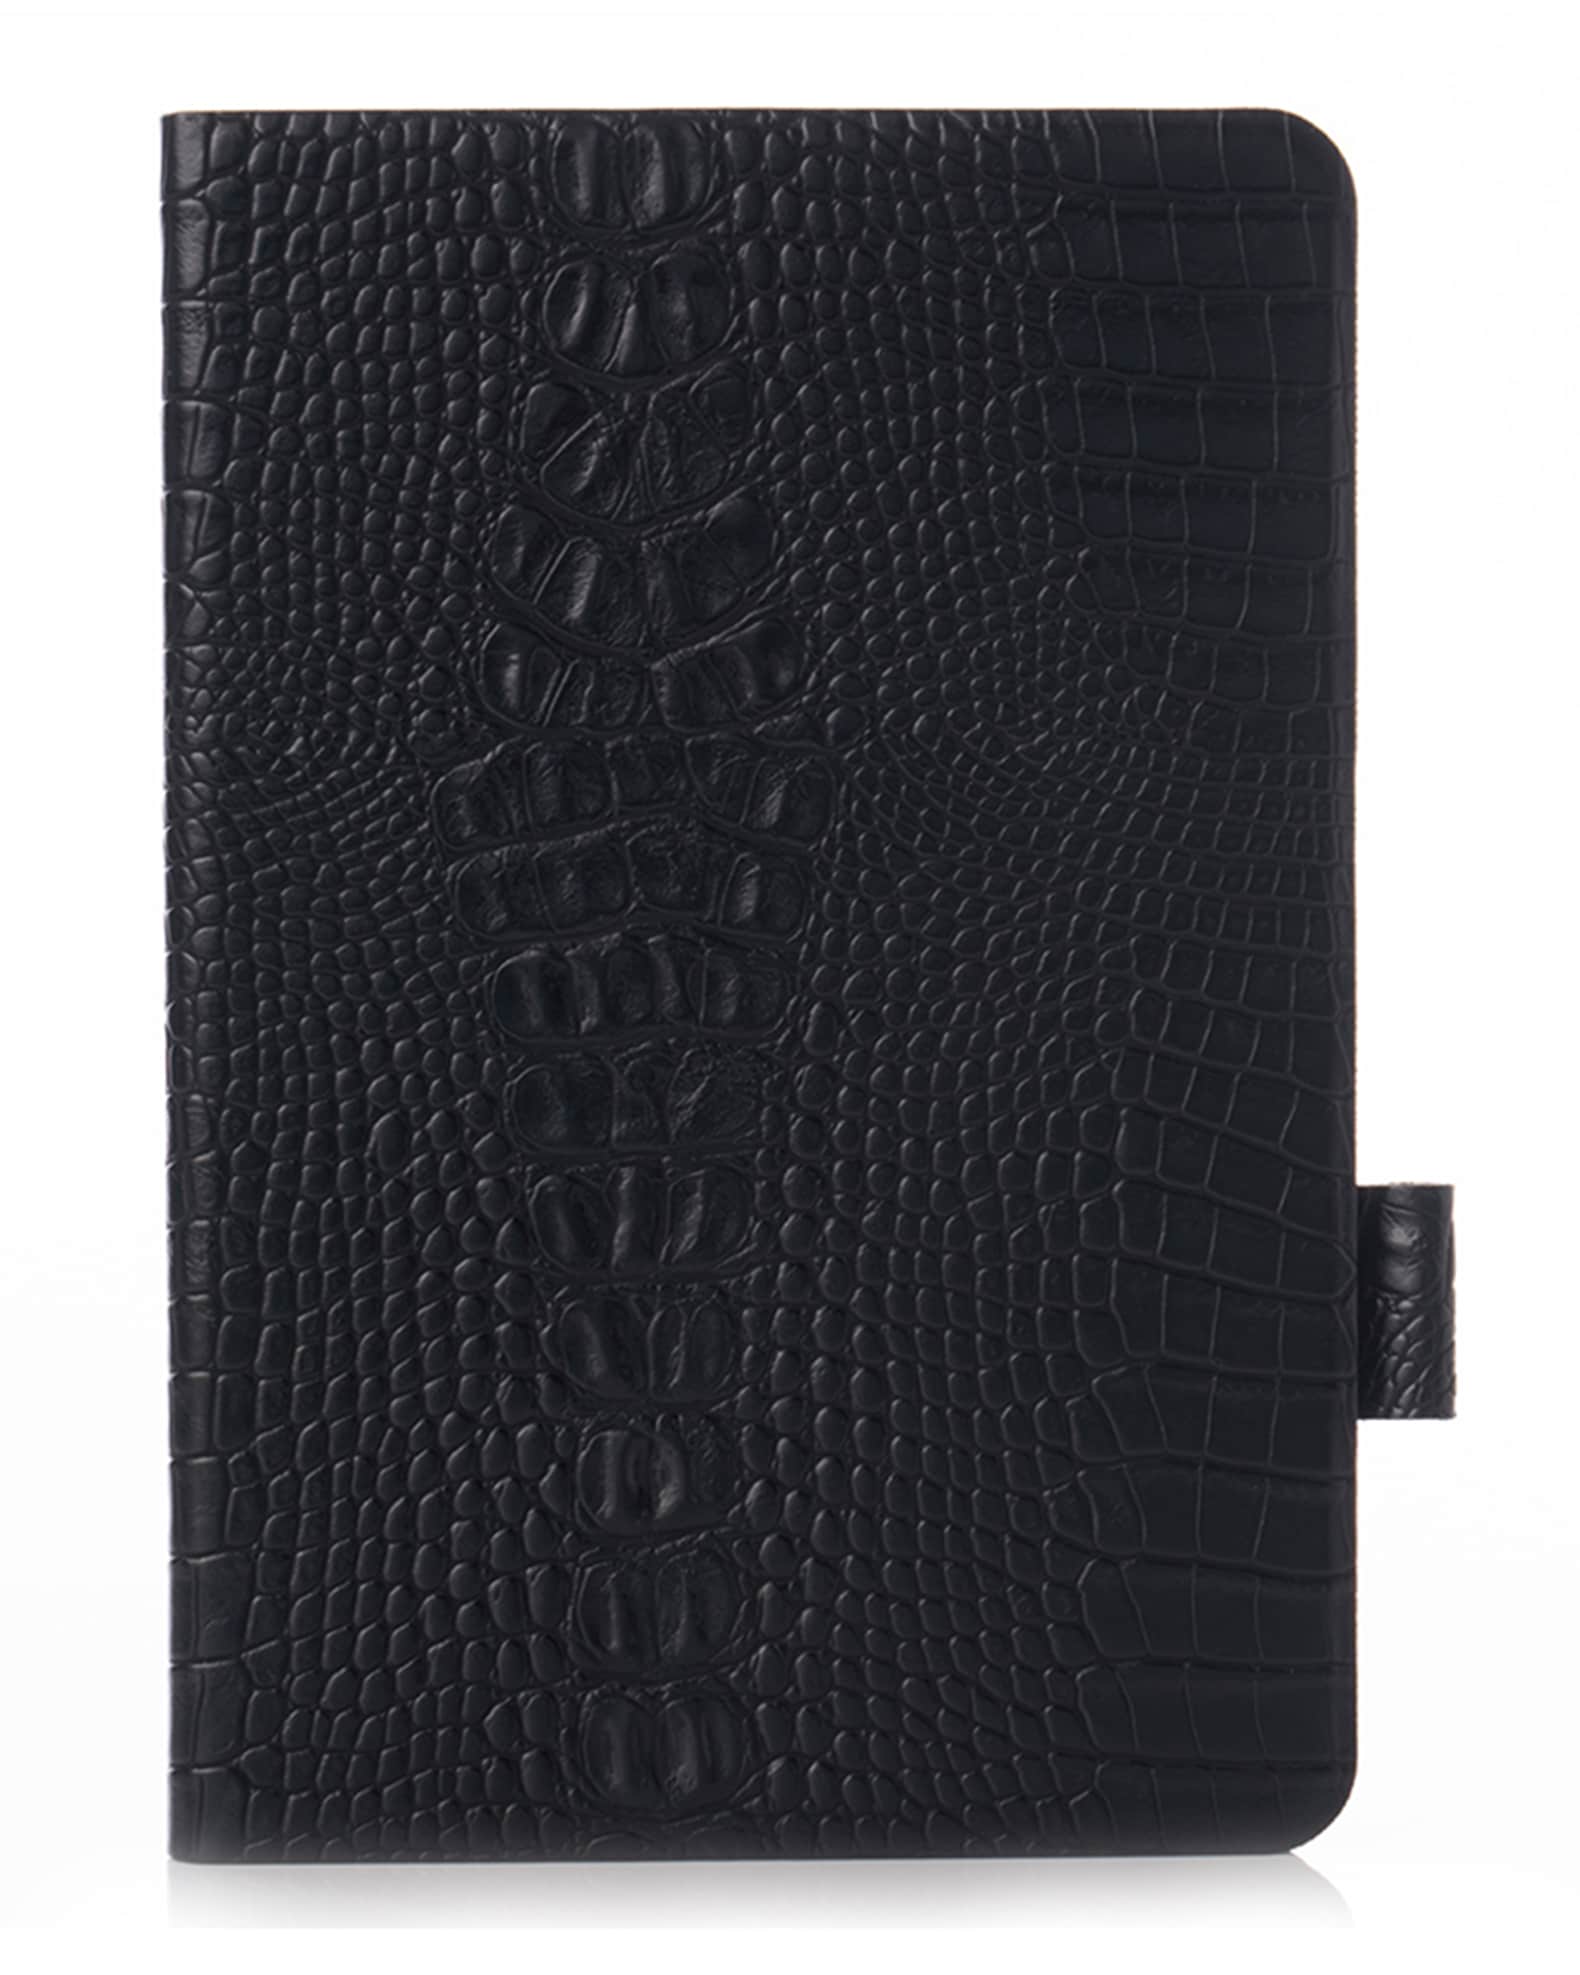 Chic Geeks Faux Crocodile iPad Case - Black